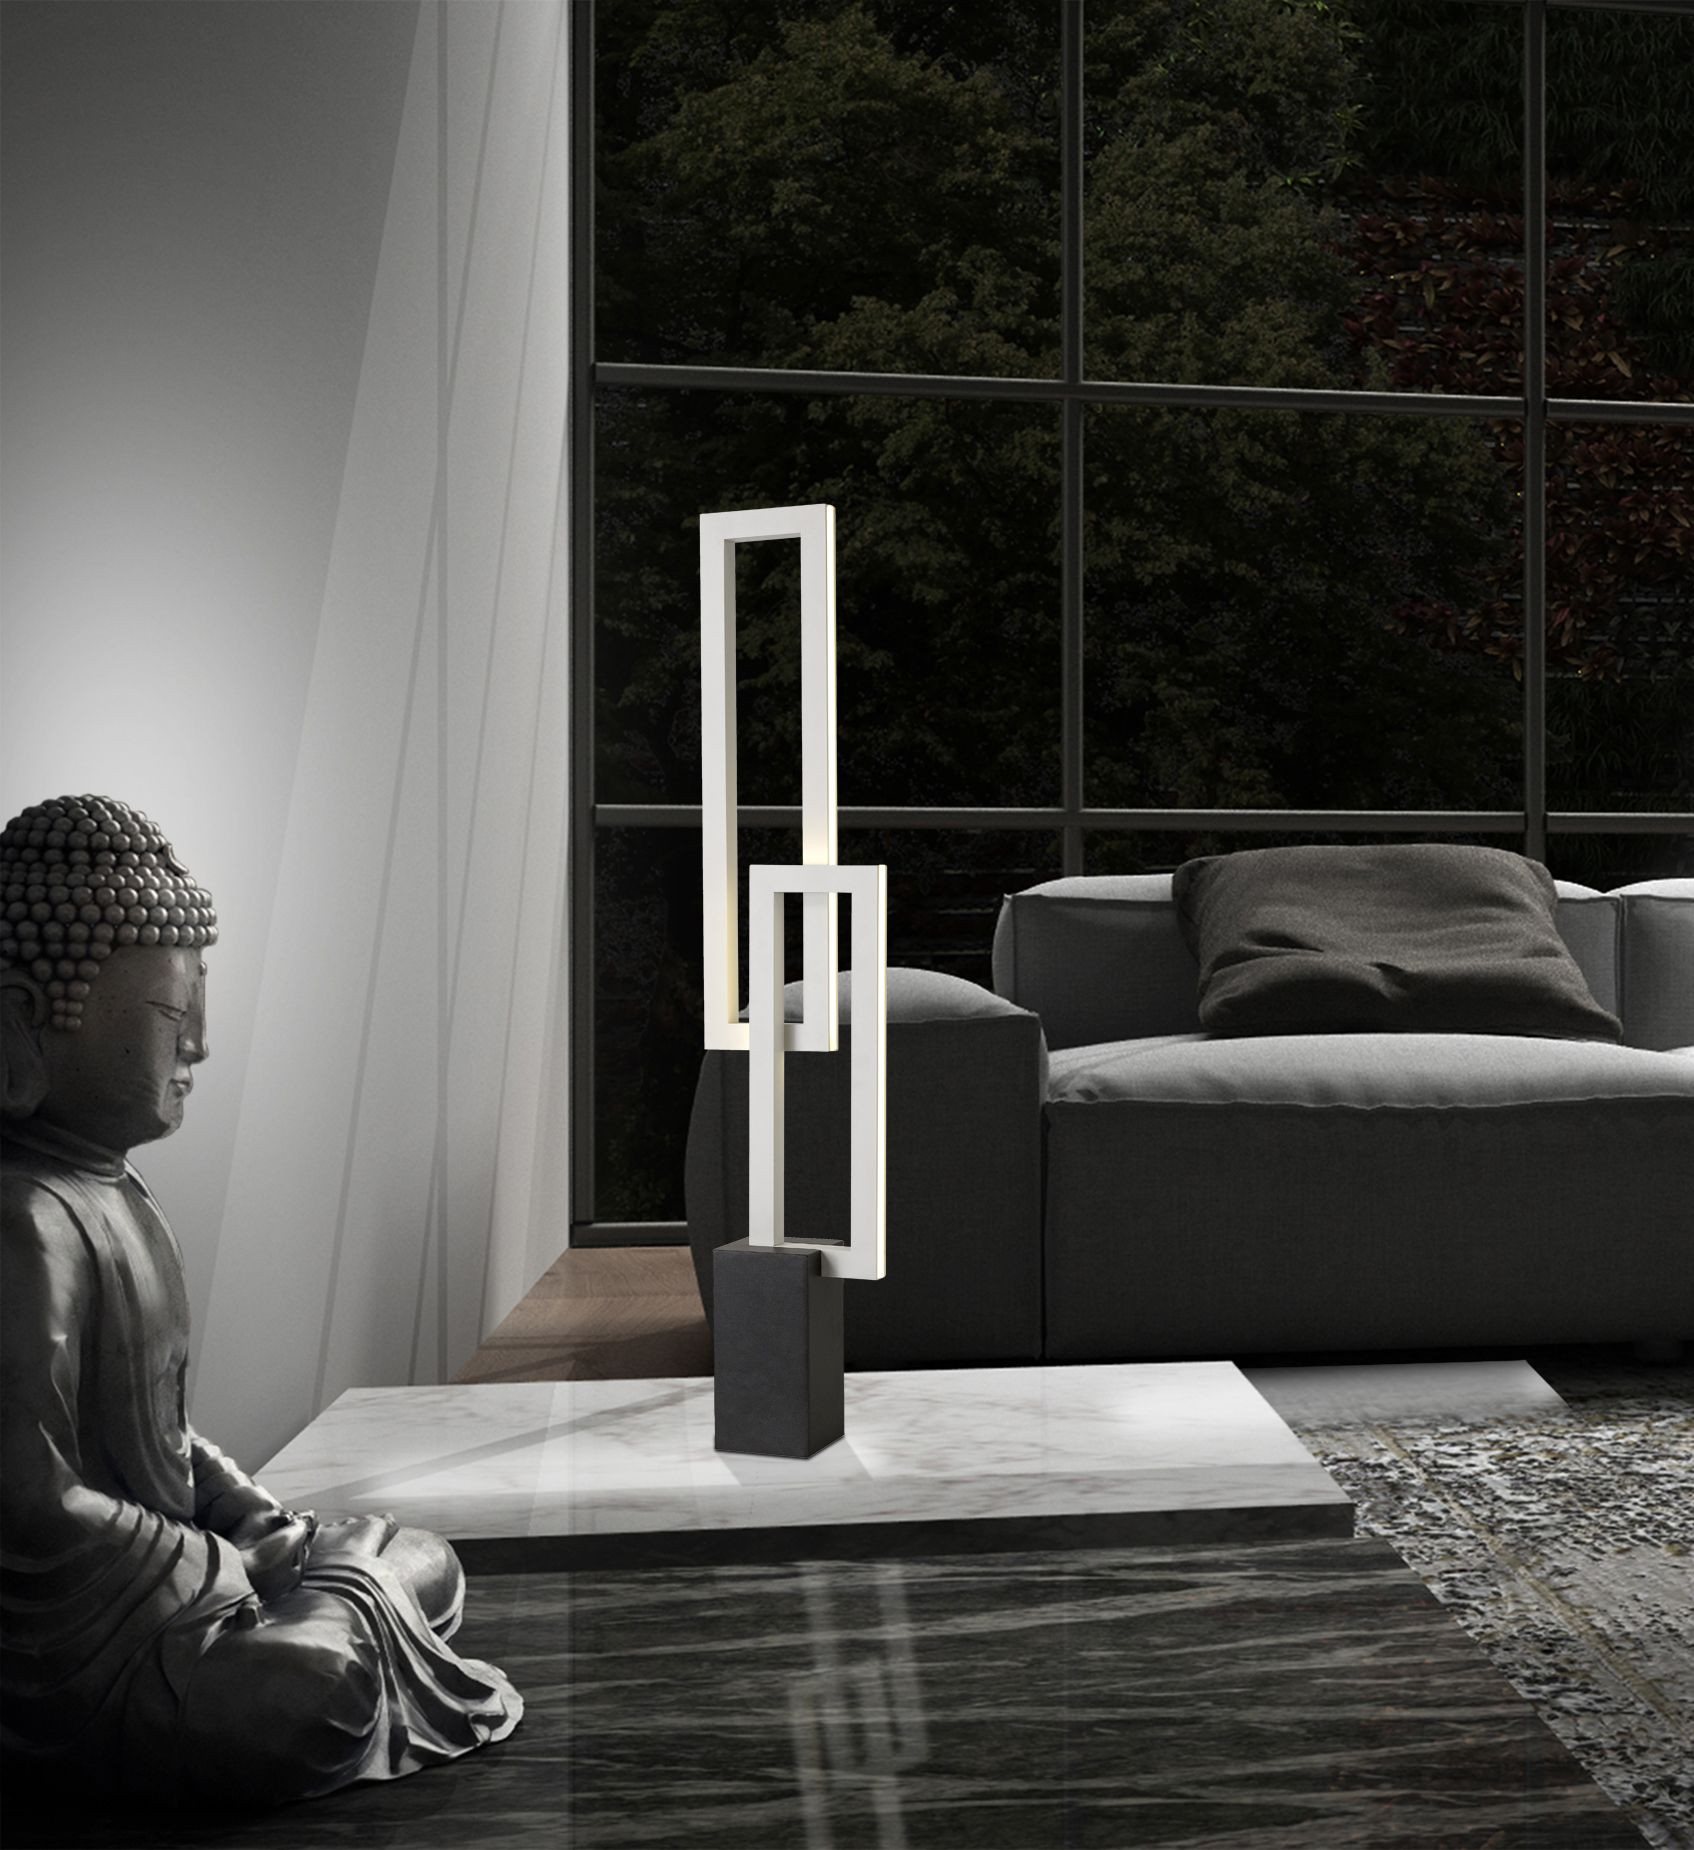 Lampe design led MURAL - Mantra